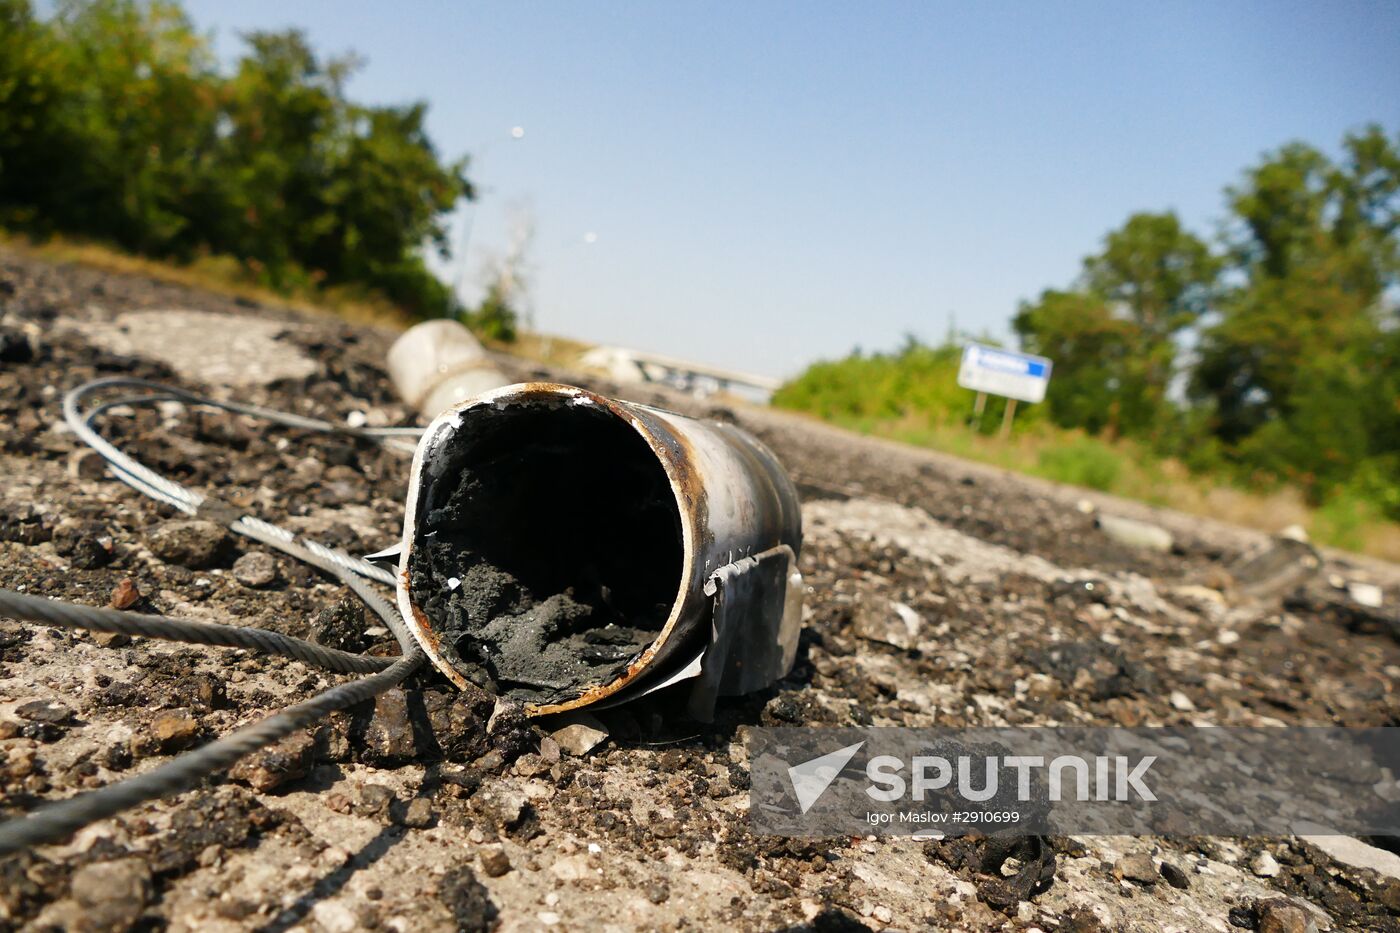 Aftermath of Donetsk filter plant shelling